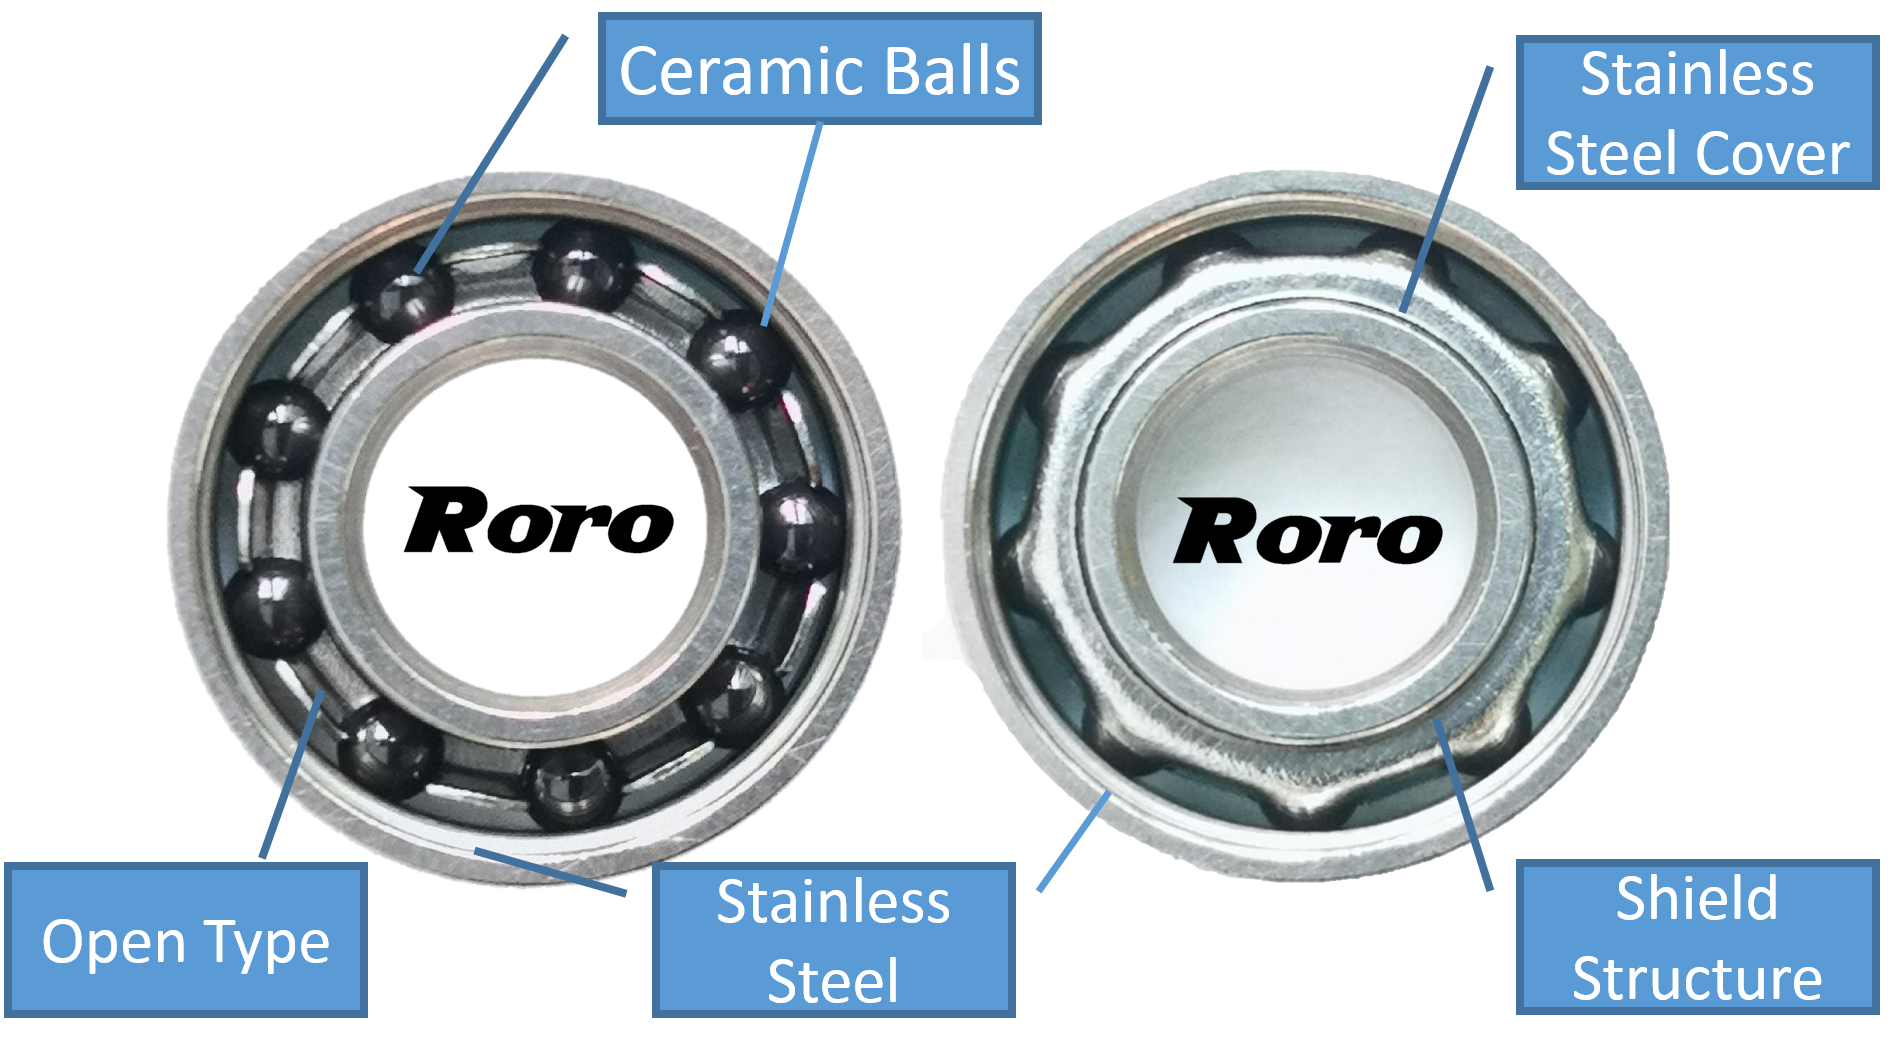 What is a Roro ceramic spool bearings for baitcasting reel?